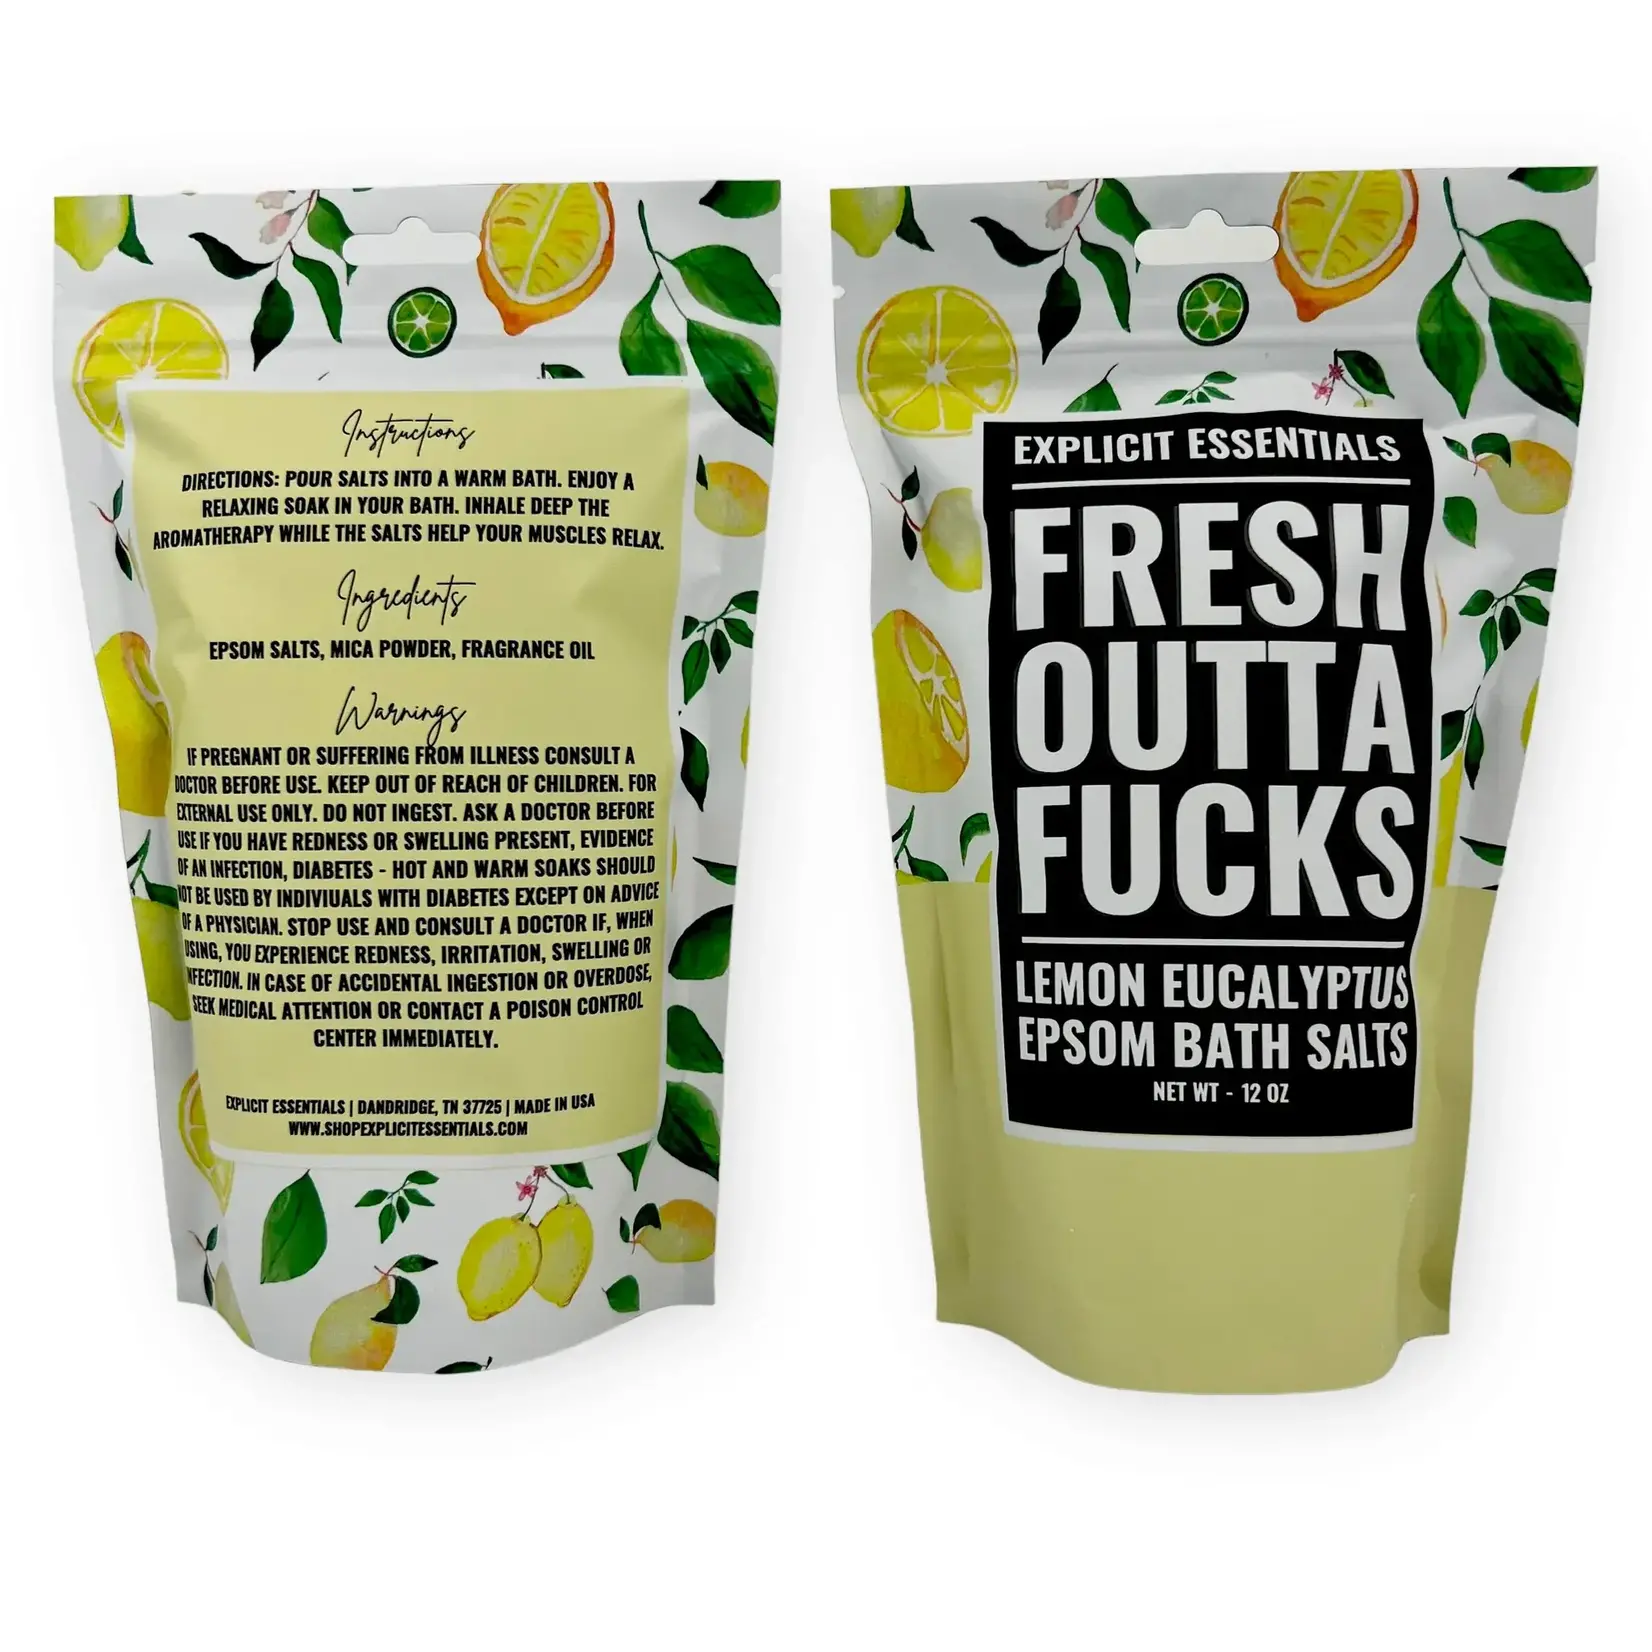 Epsom Bath Salts - Fresh outta fucks (lemon eucalyptus)